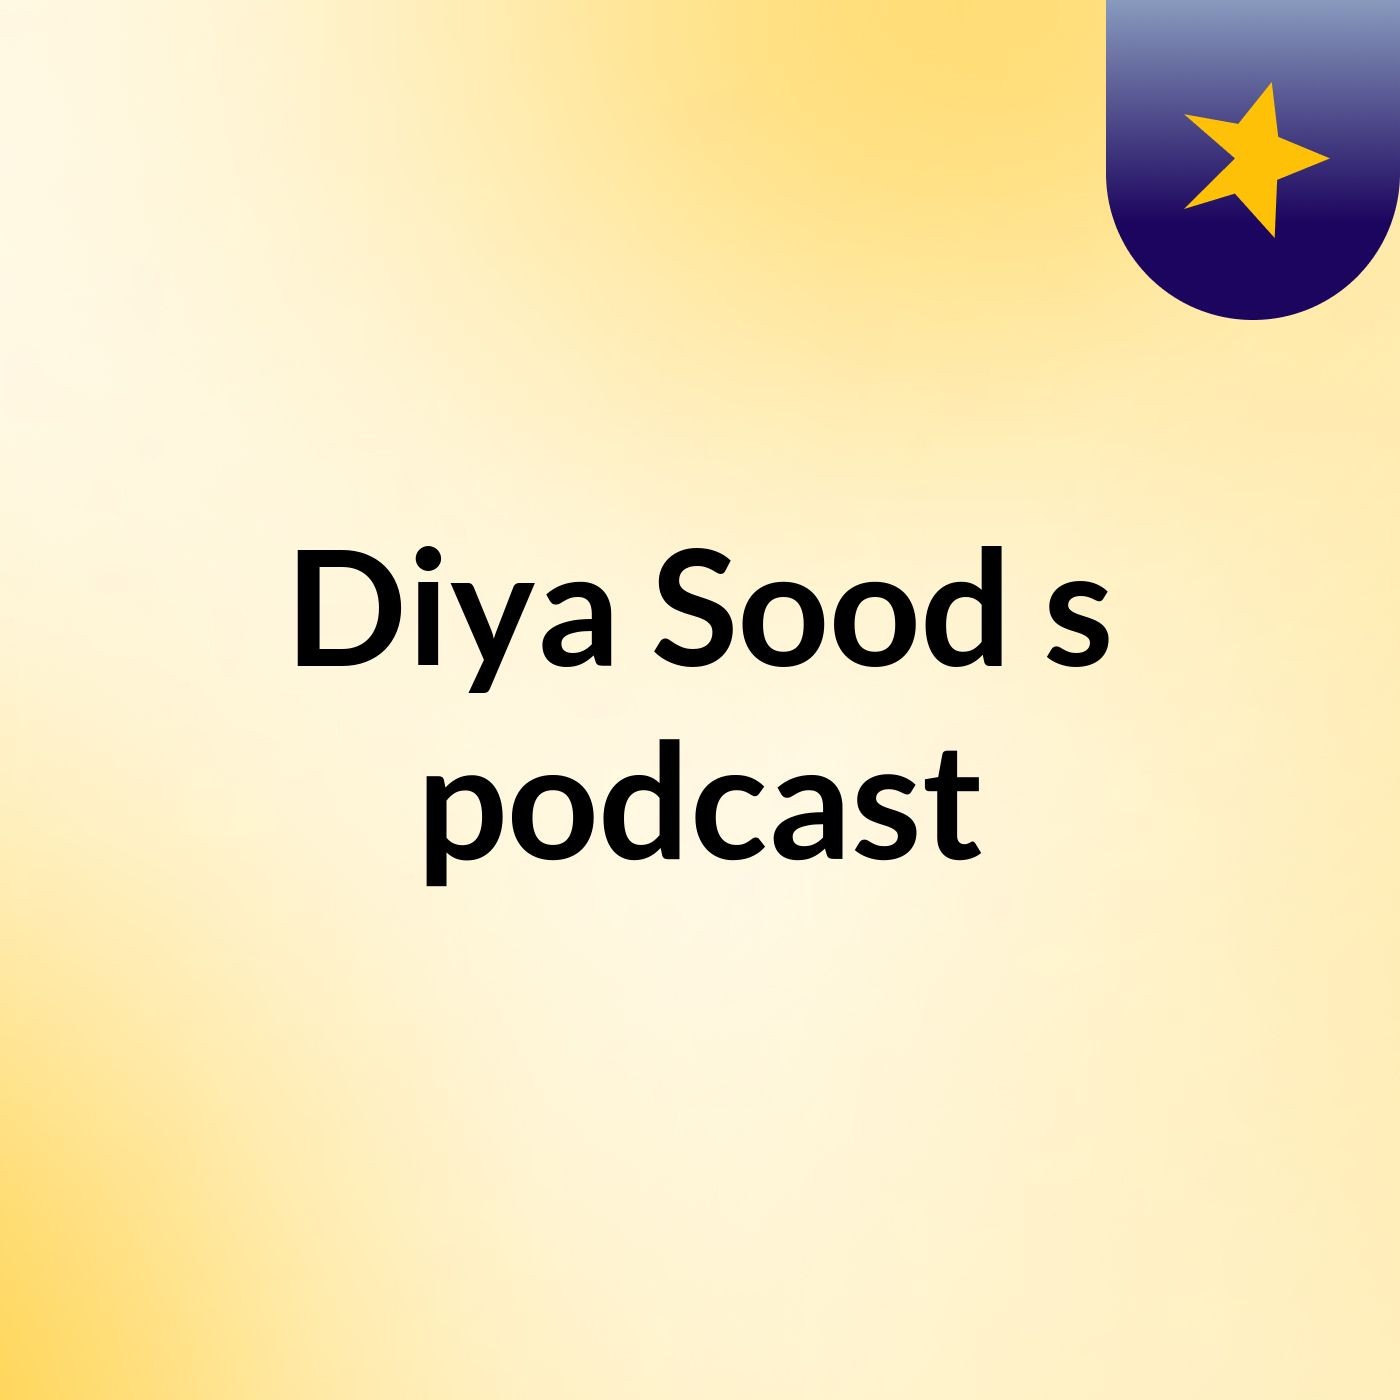 Diya Sood's podcast